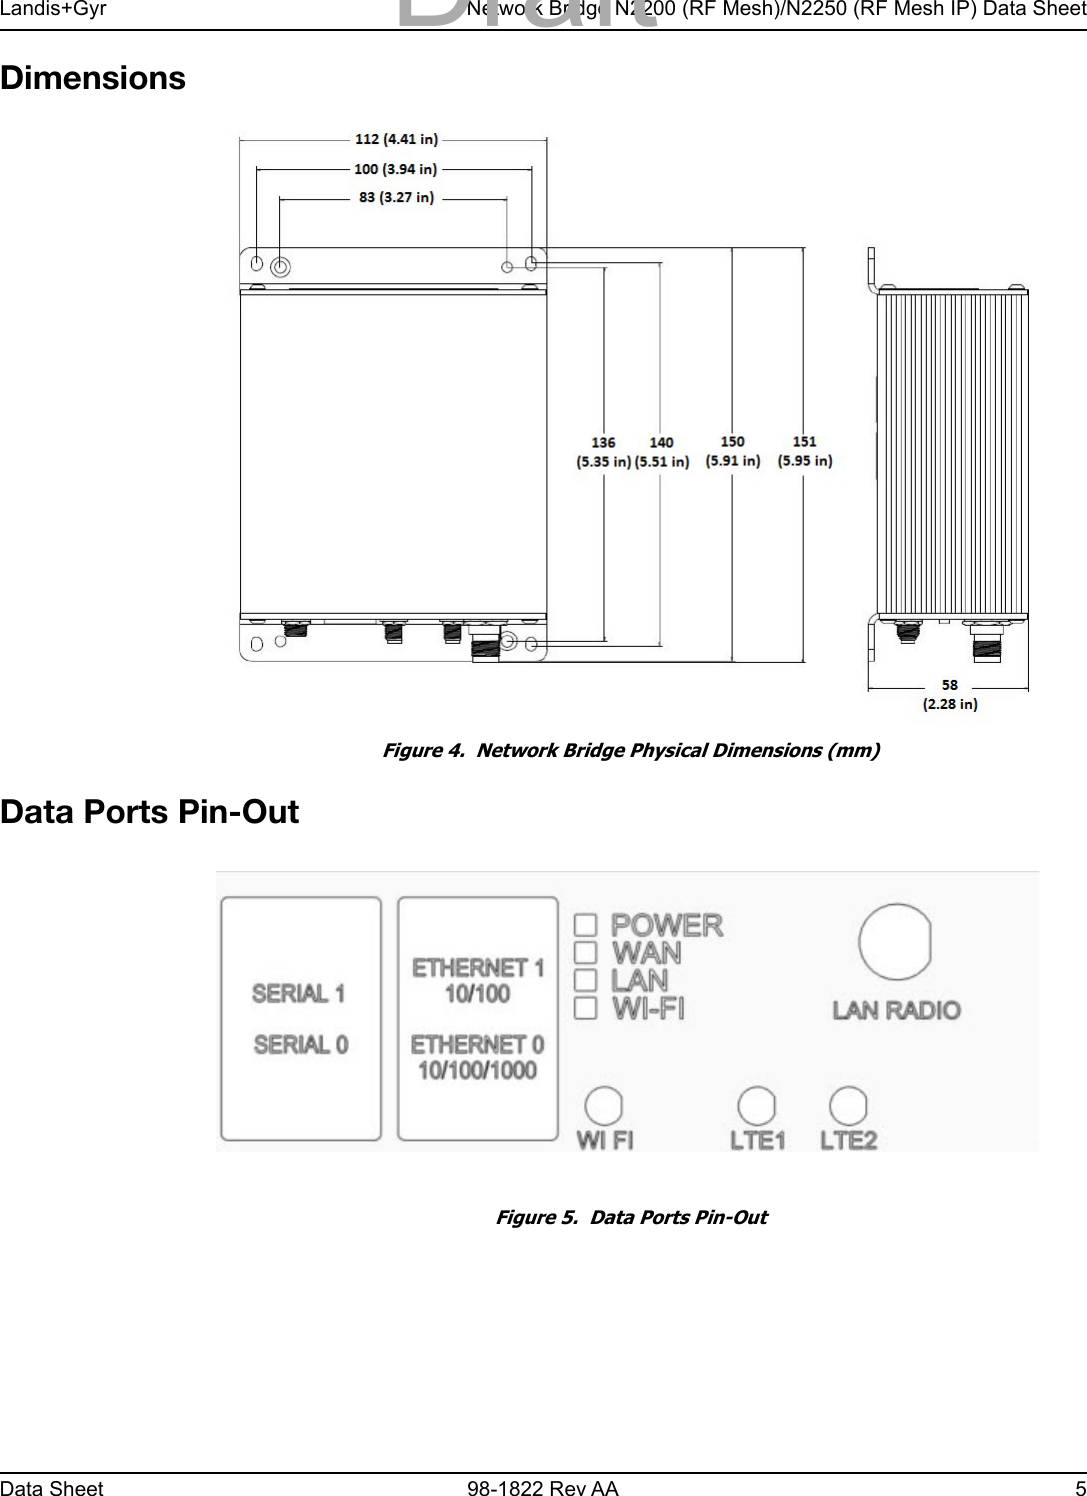 Landis+Gyr Network Bridge N2200 (RF Mesh)/N2250 (RF Mesh IP) Data SheetData Sheet 98-1822 Rev AA 5Dimensions Figure 4.  Network Bridge Physical Dimensions (mm)Data Ports Pin-Out Figure 5.  Data Ports Pin-OutDraft